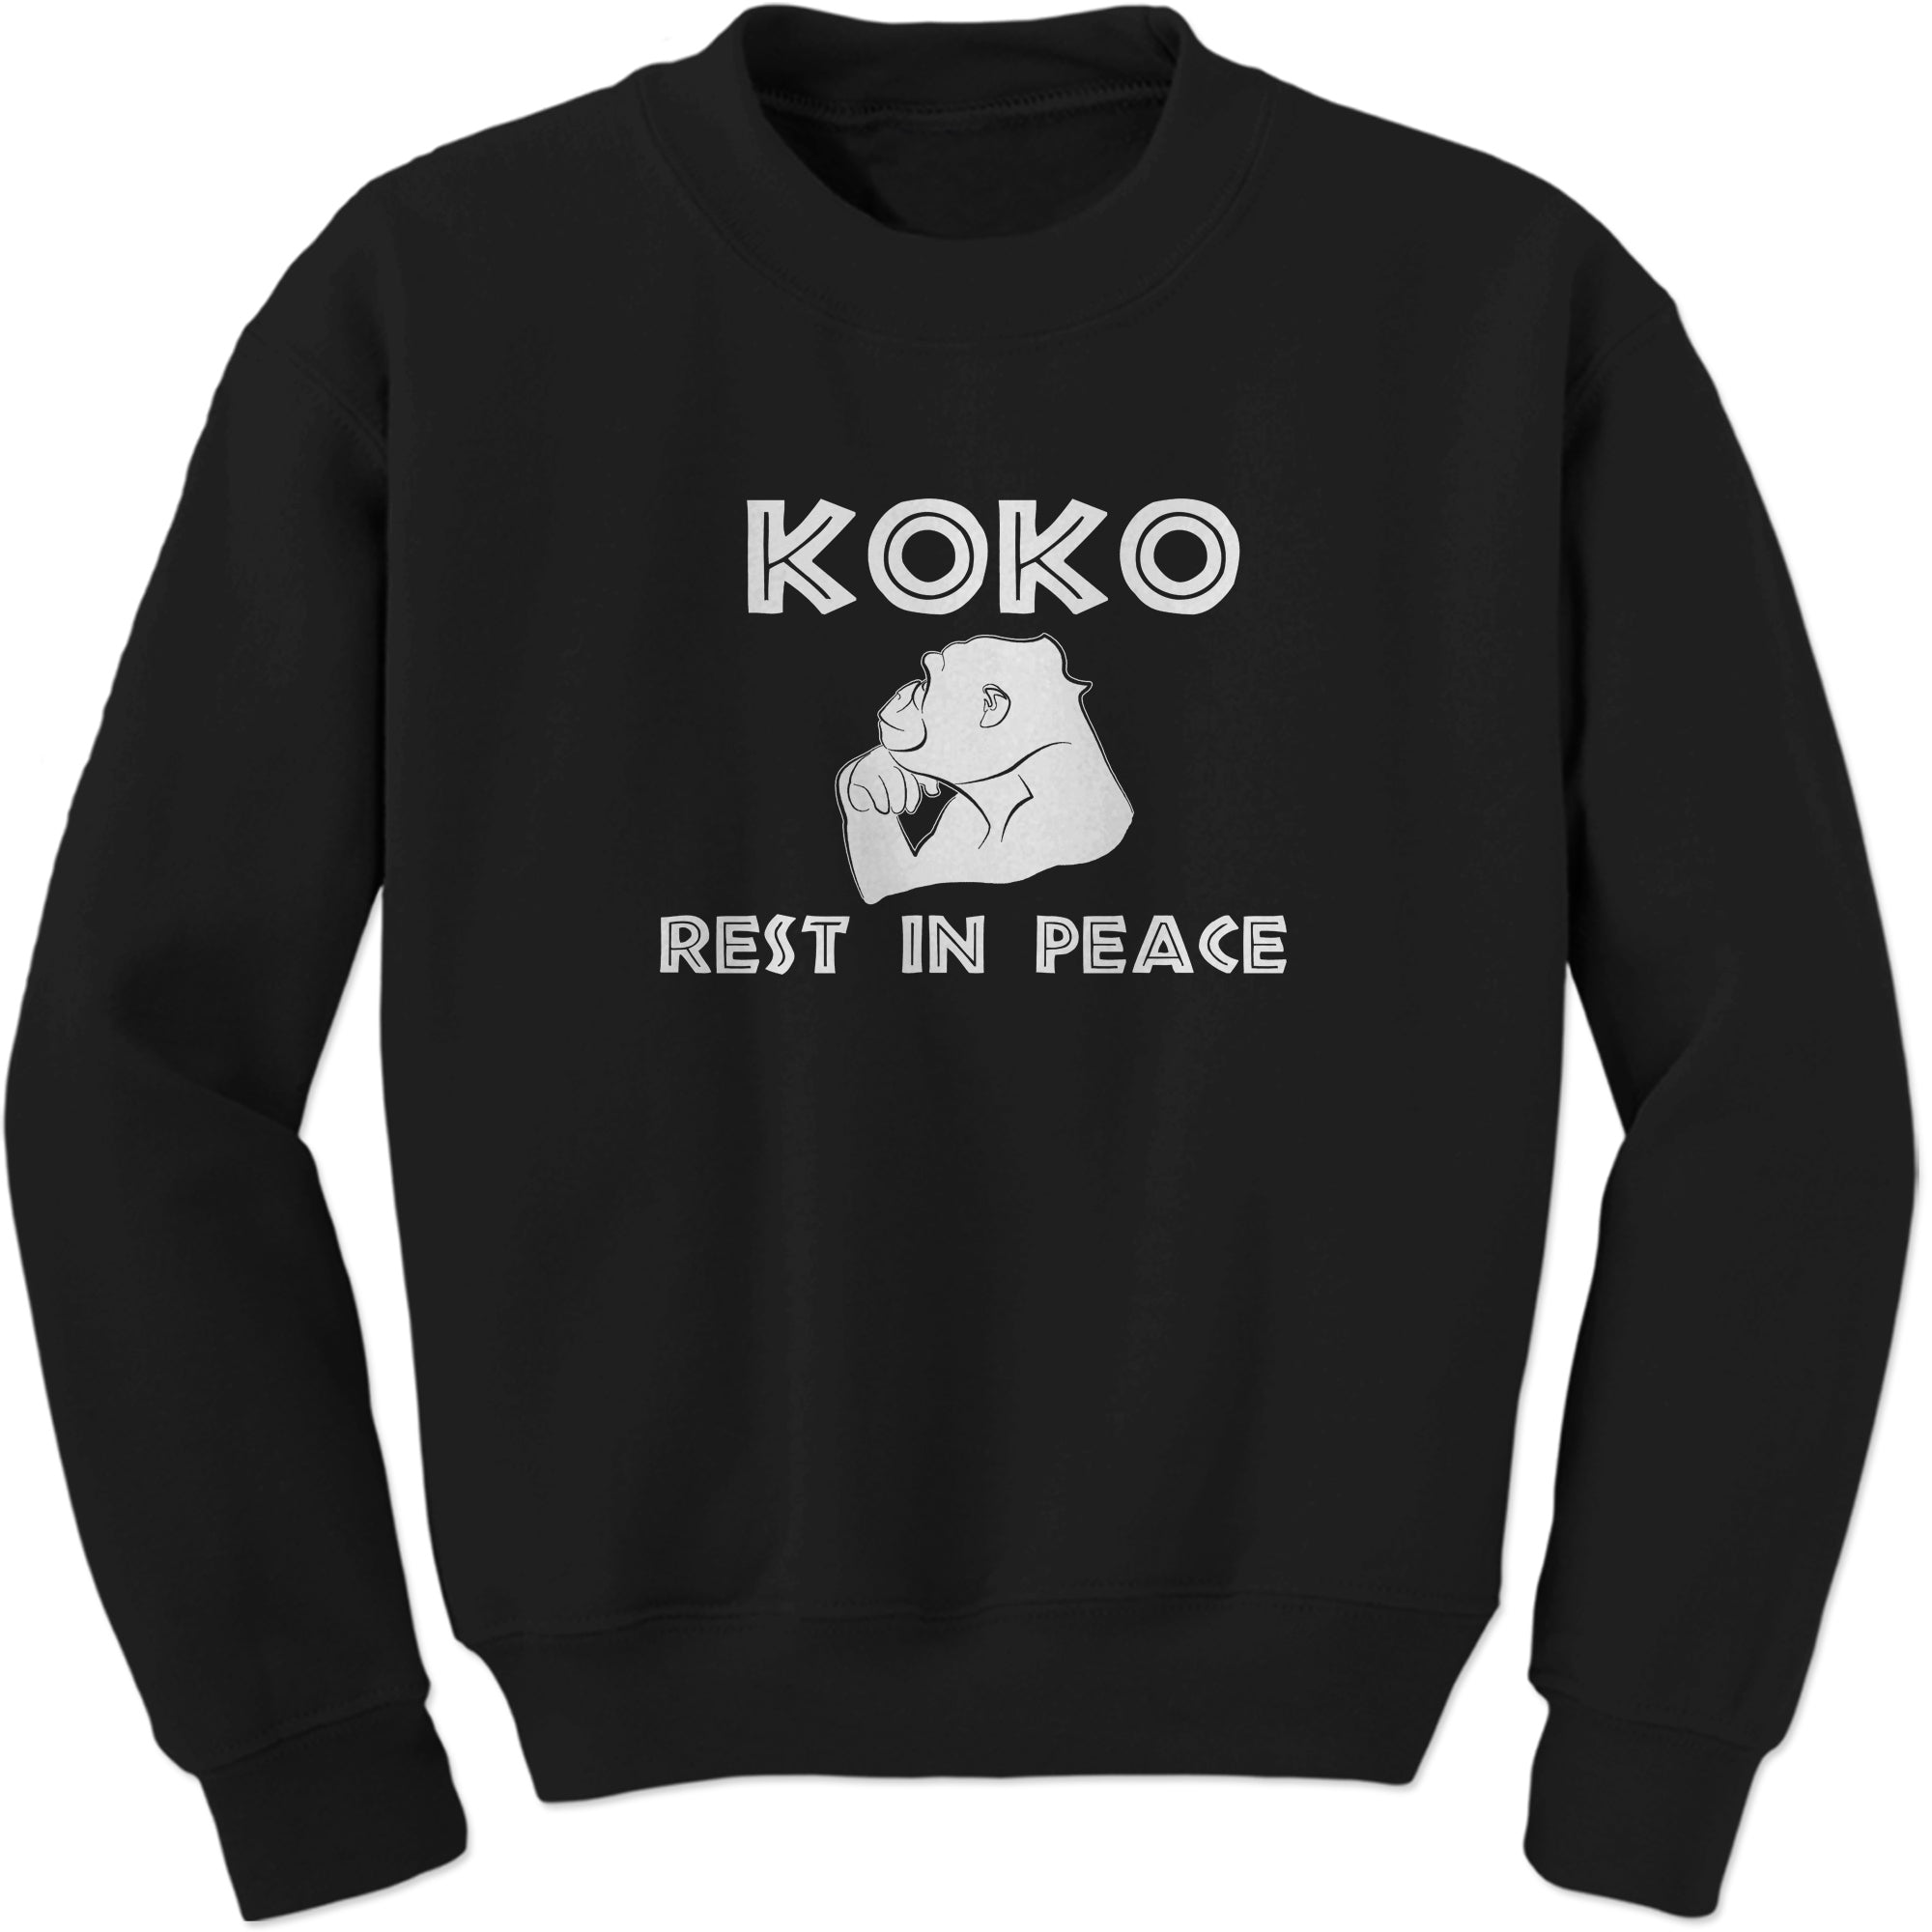 Koko the Talking Gorilla Rest in Peace Sweatshirt